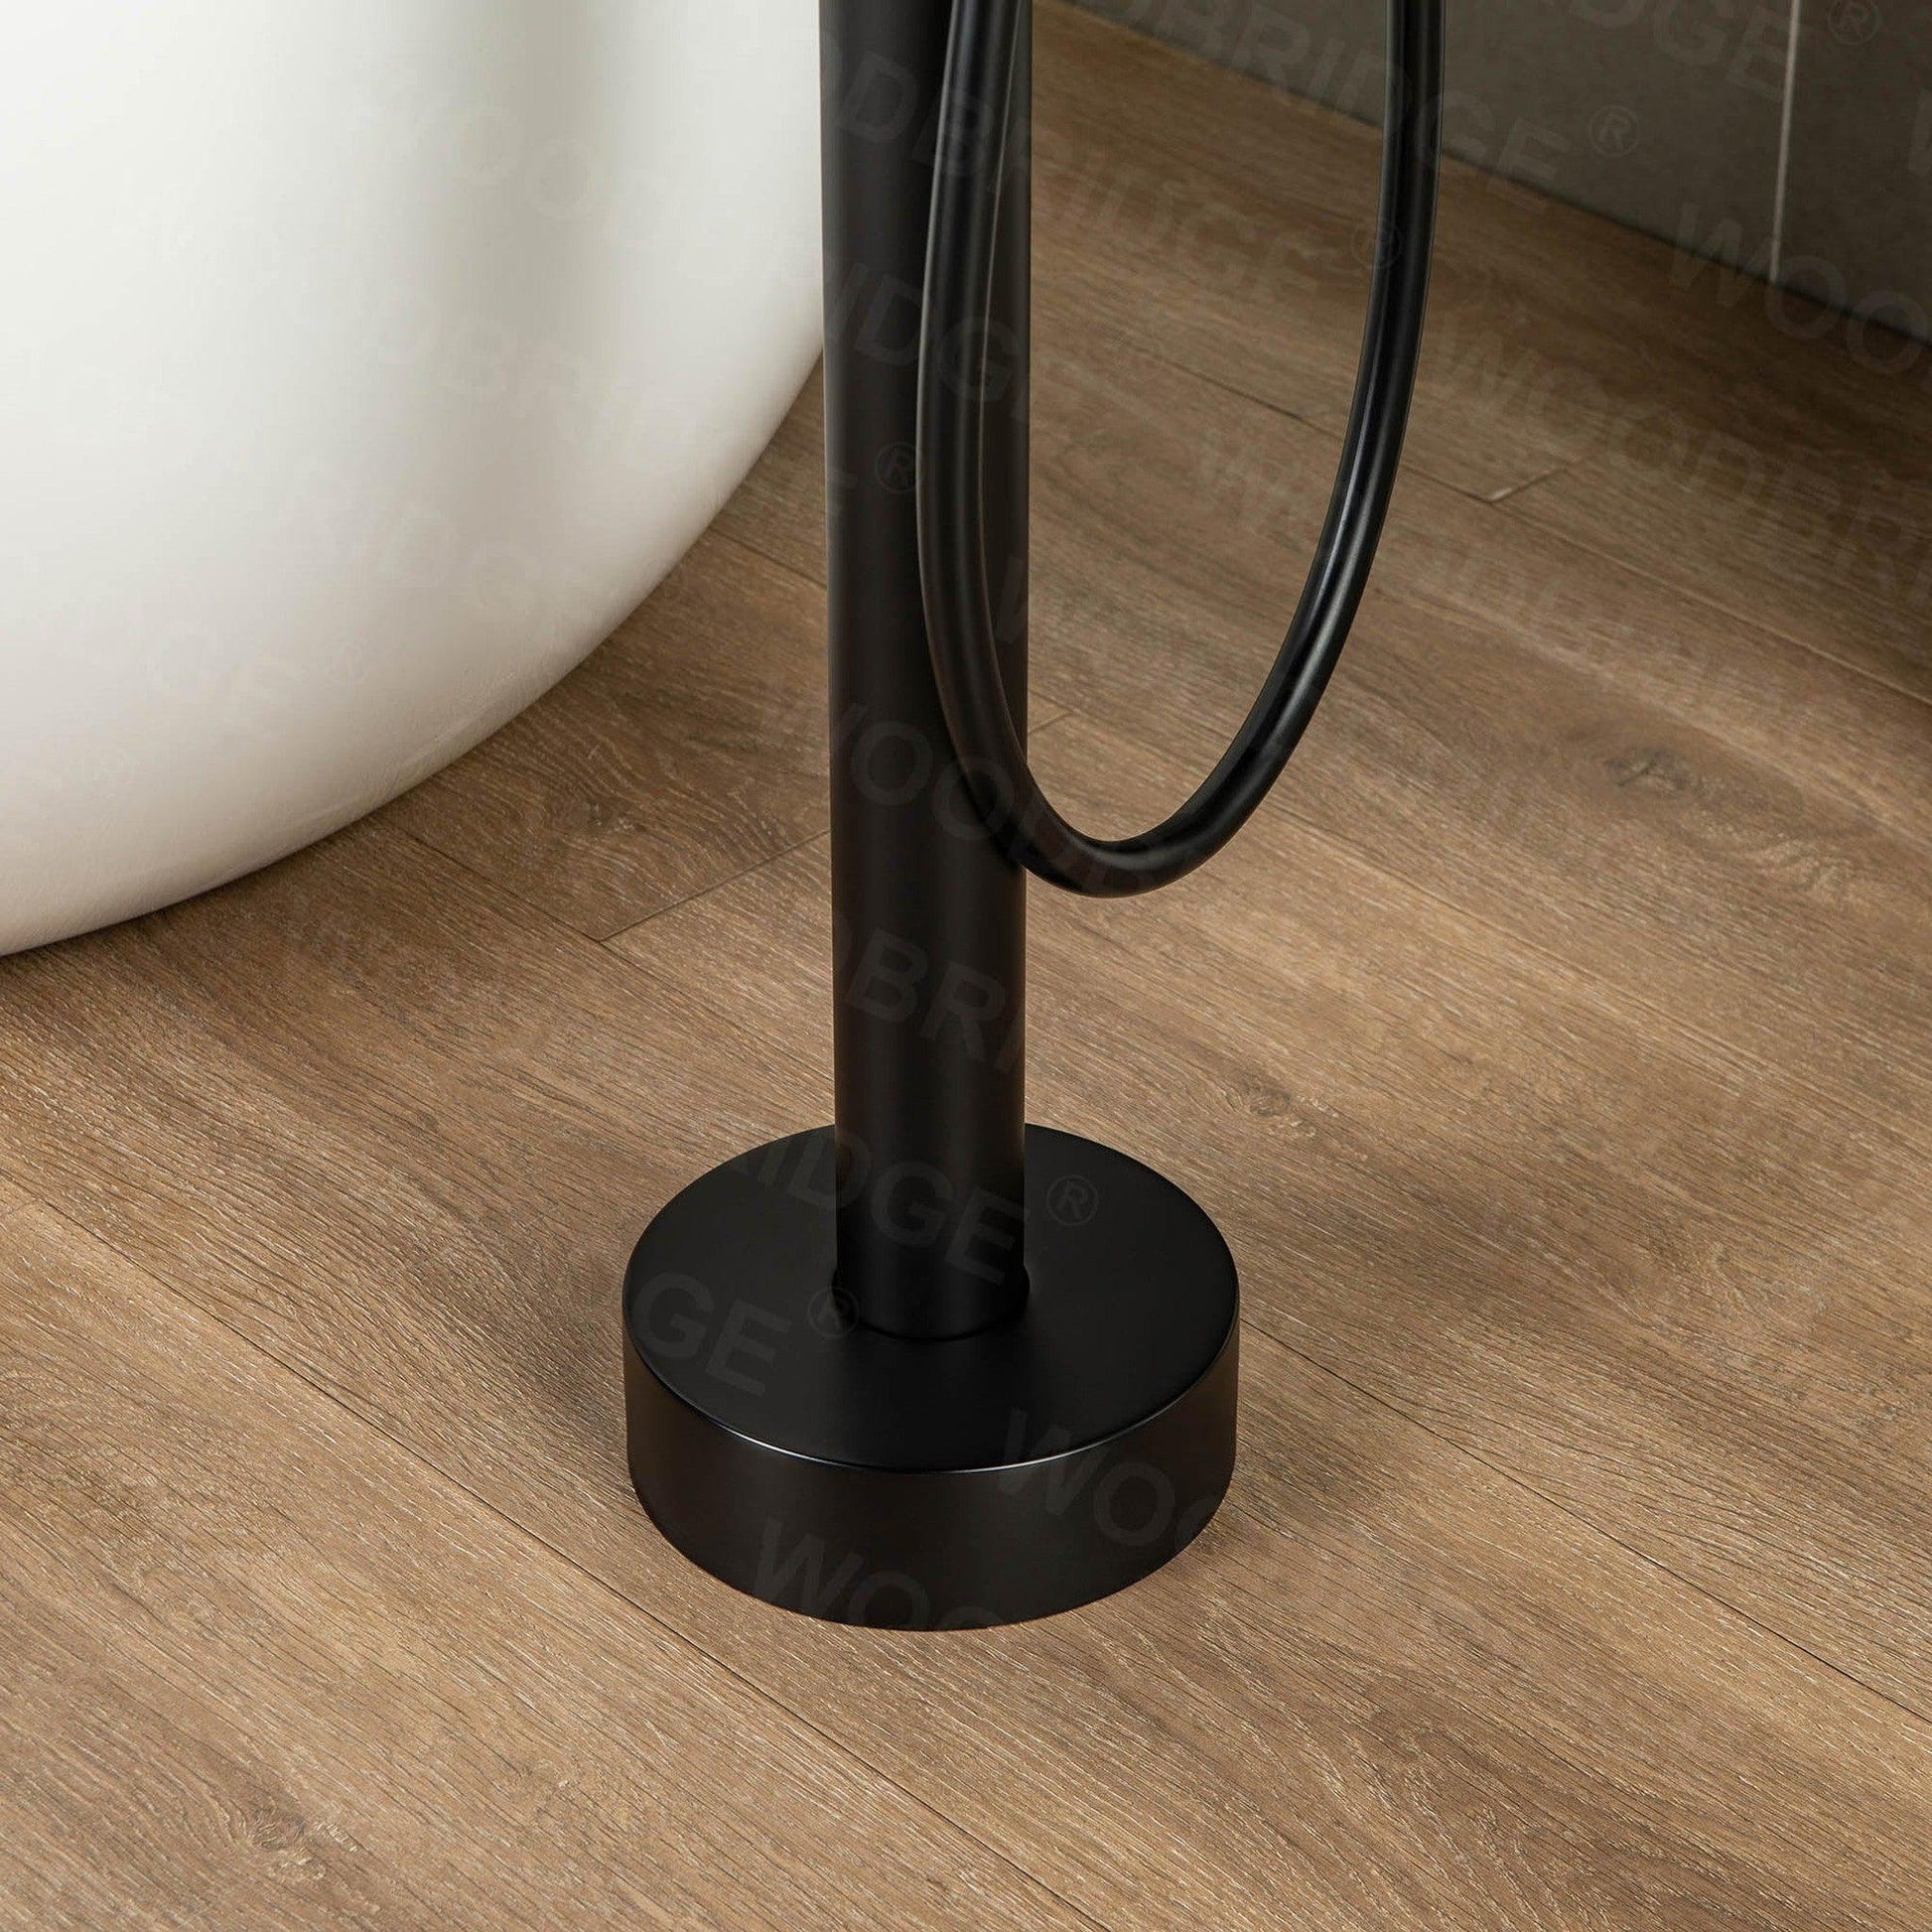 WoodBridge F0006MBRD Matte Black Contemporary Single Handle Floor Mount Freestanding Tub Filler Faucet With Hand Shower